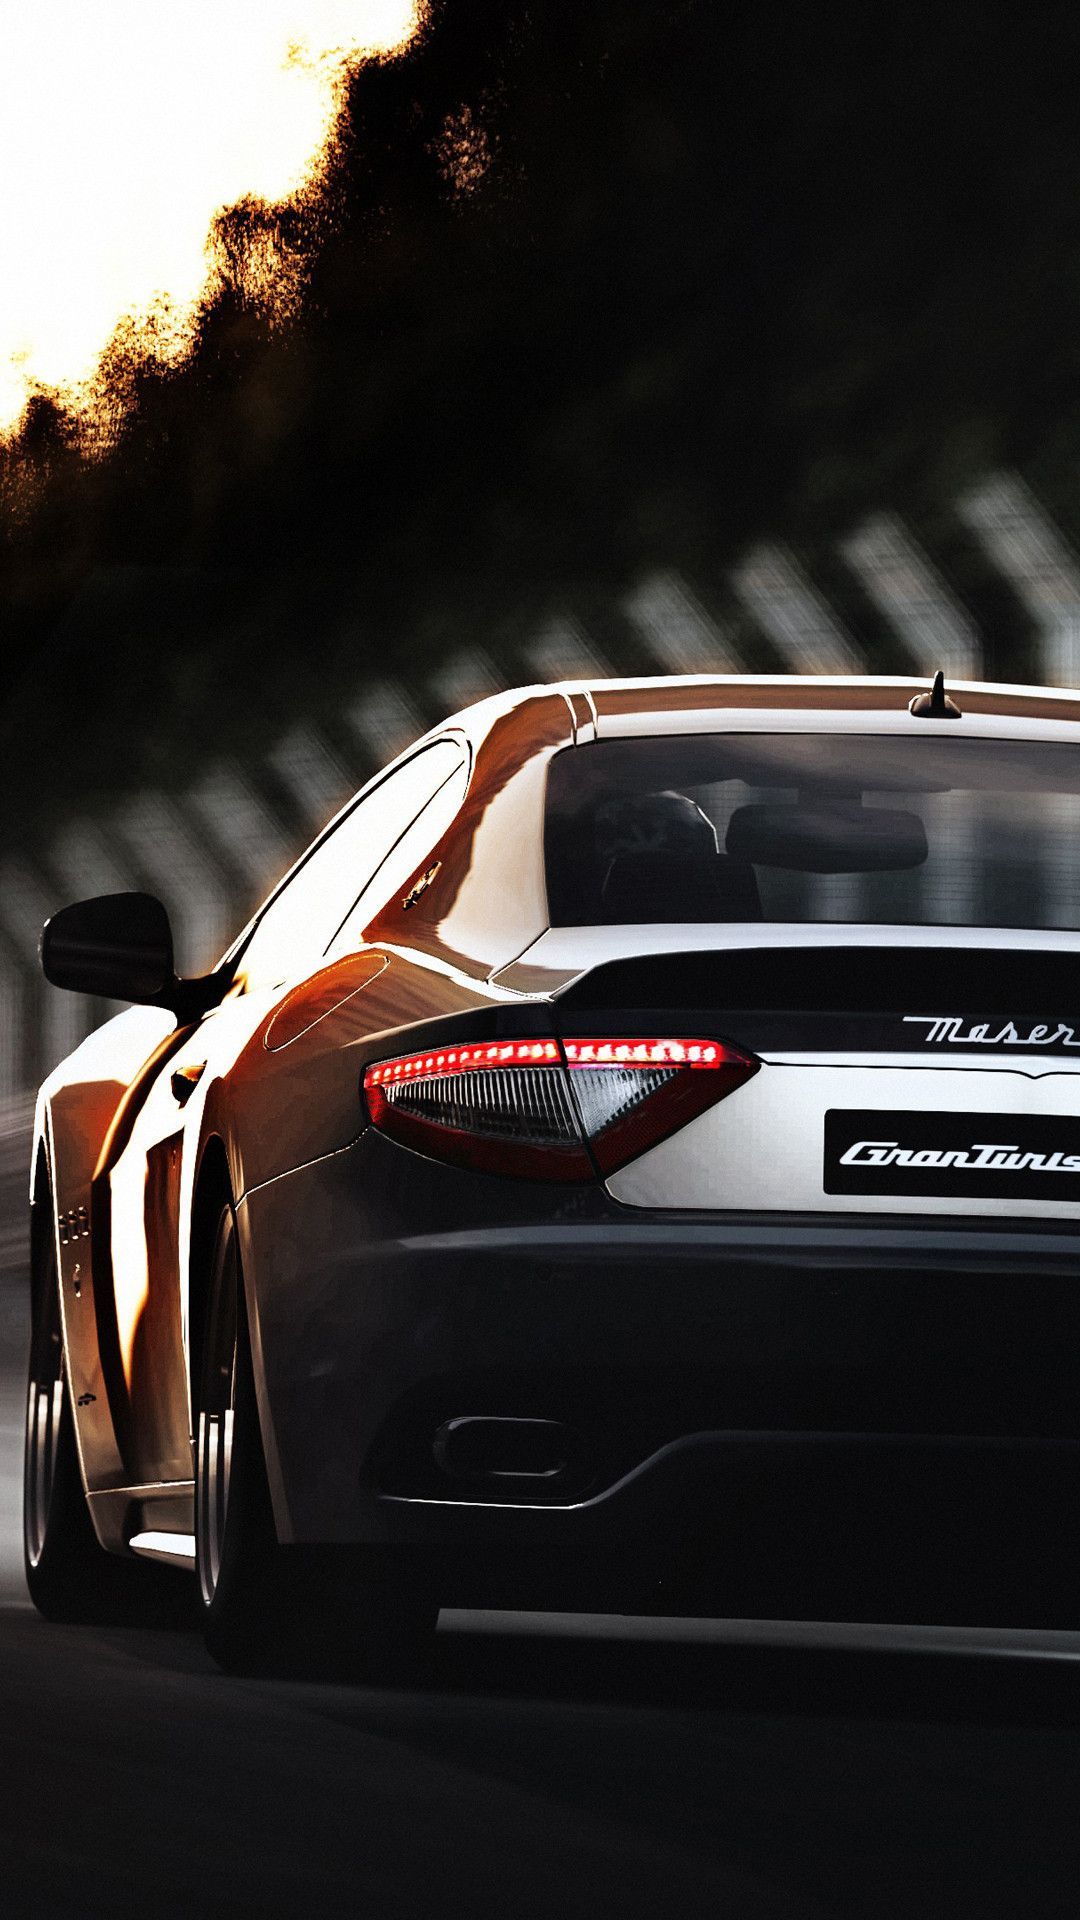 Mejores fondos de pantalla de bloqueo de coches | Coche impresionante | Maserati granturismo